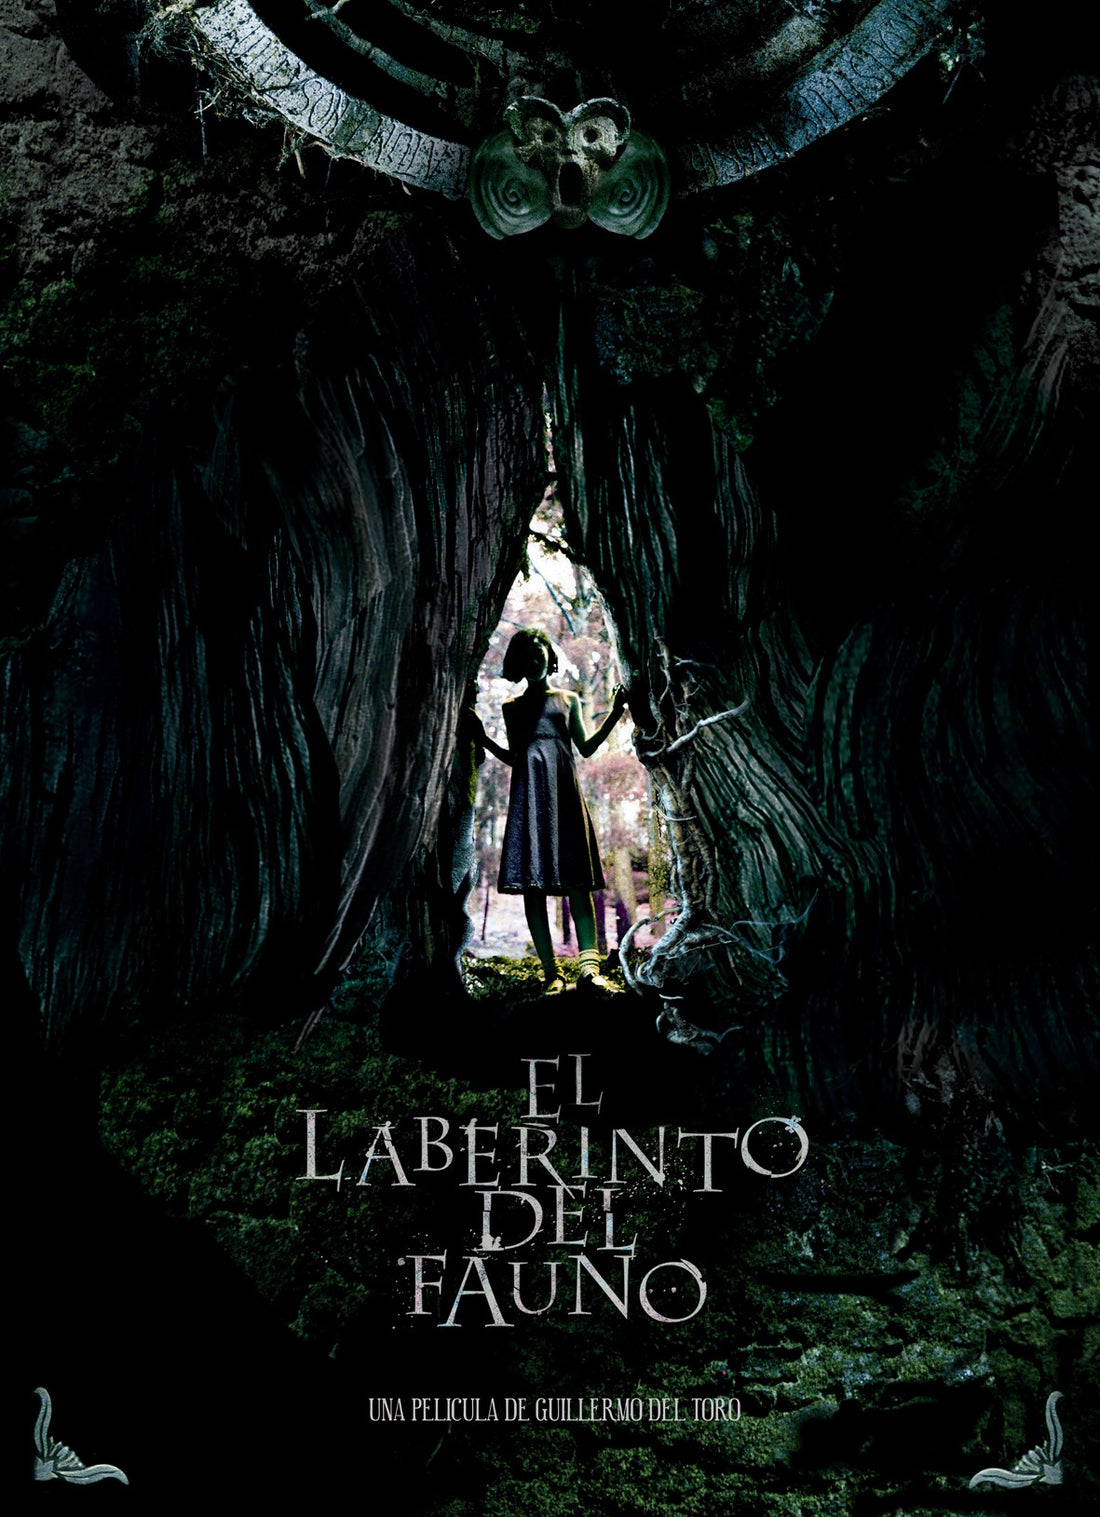 Explore Fantasy and History with "El Laberinto del Fauno"